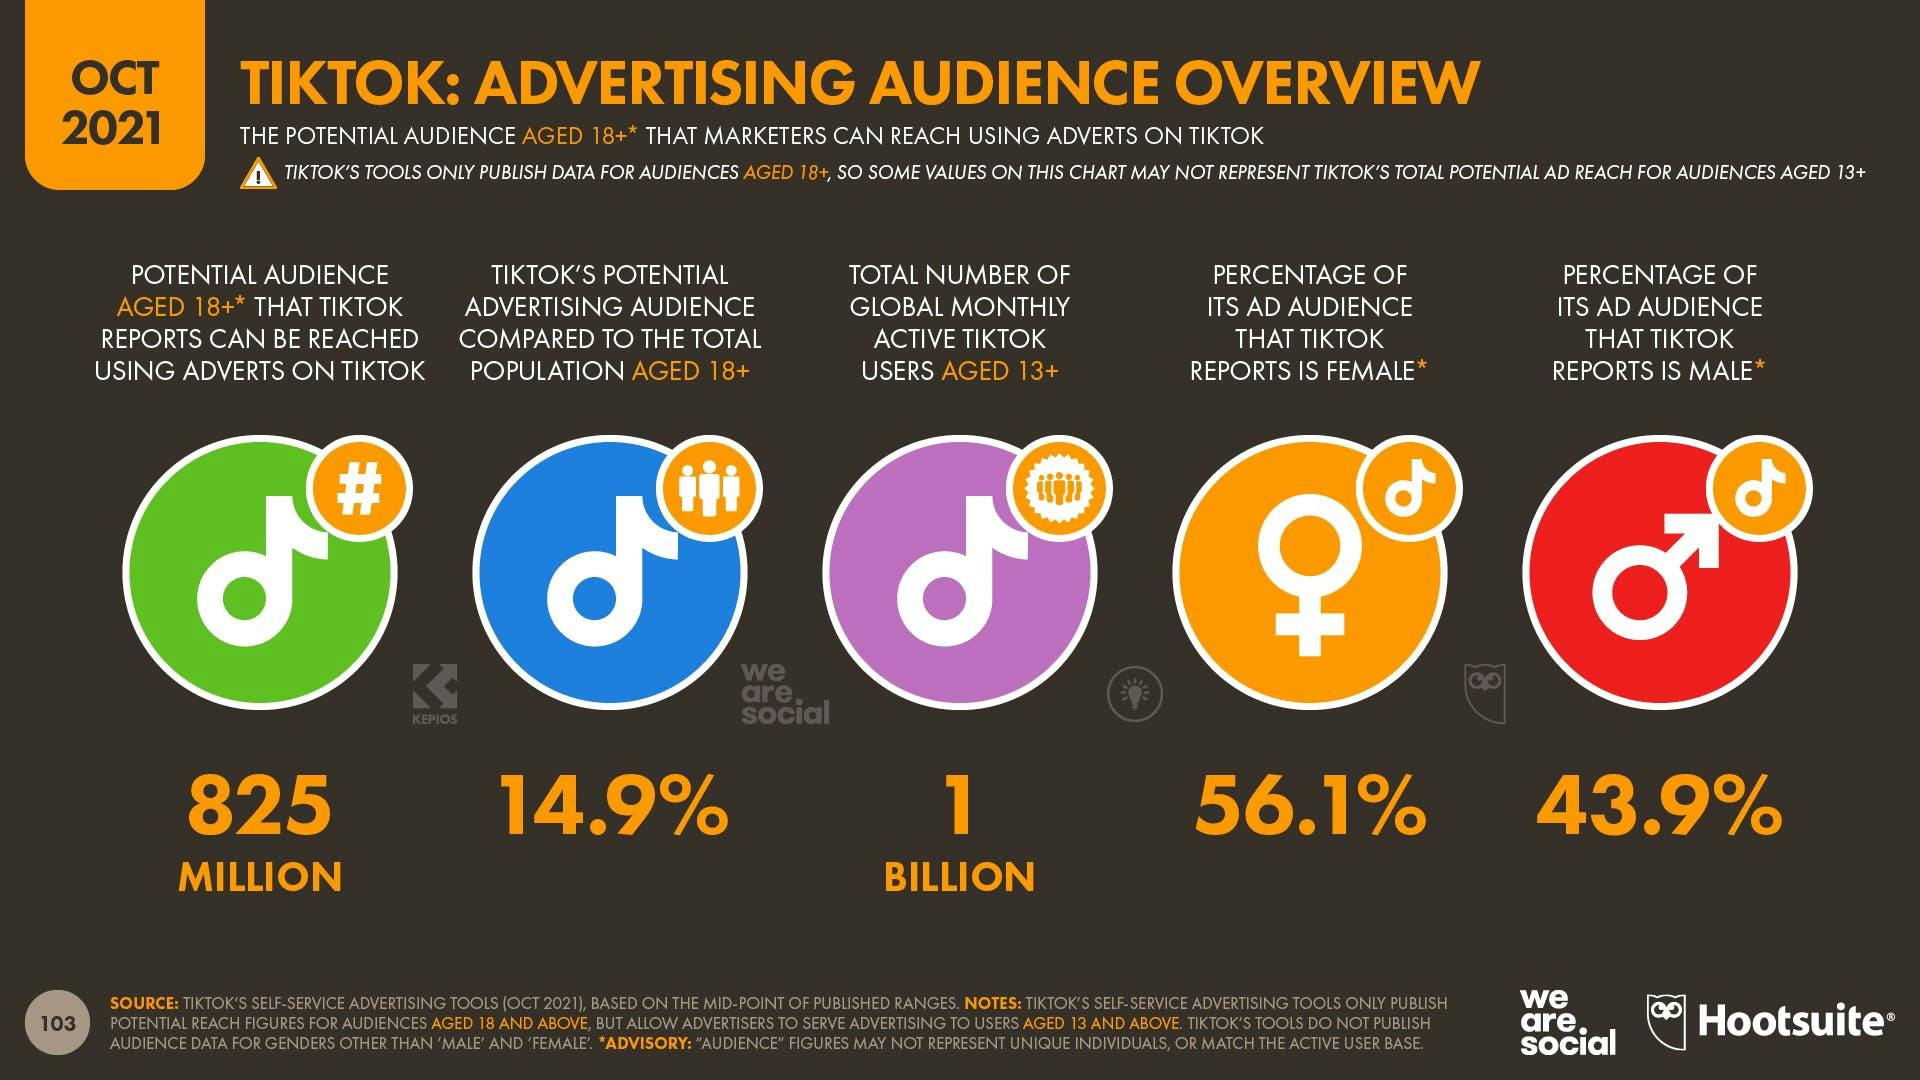 October 2021 Global Digital Report: TikTok Advertising audience overview